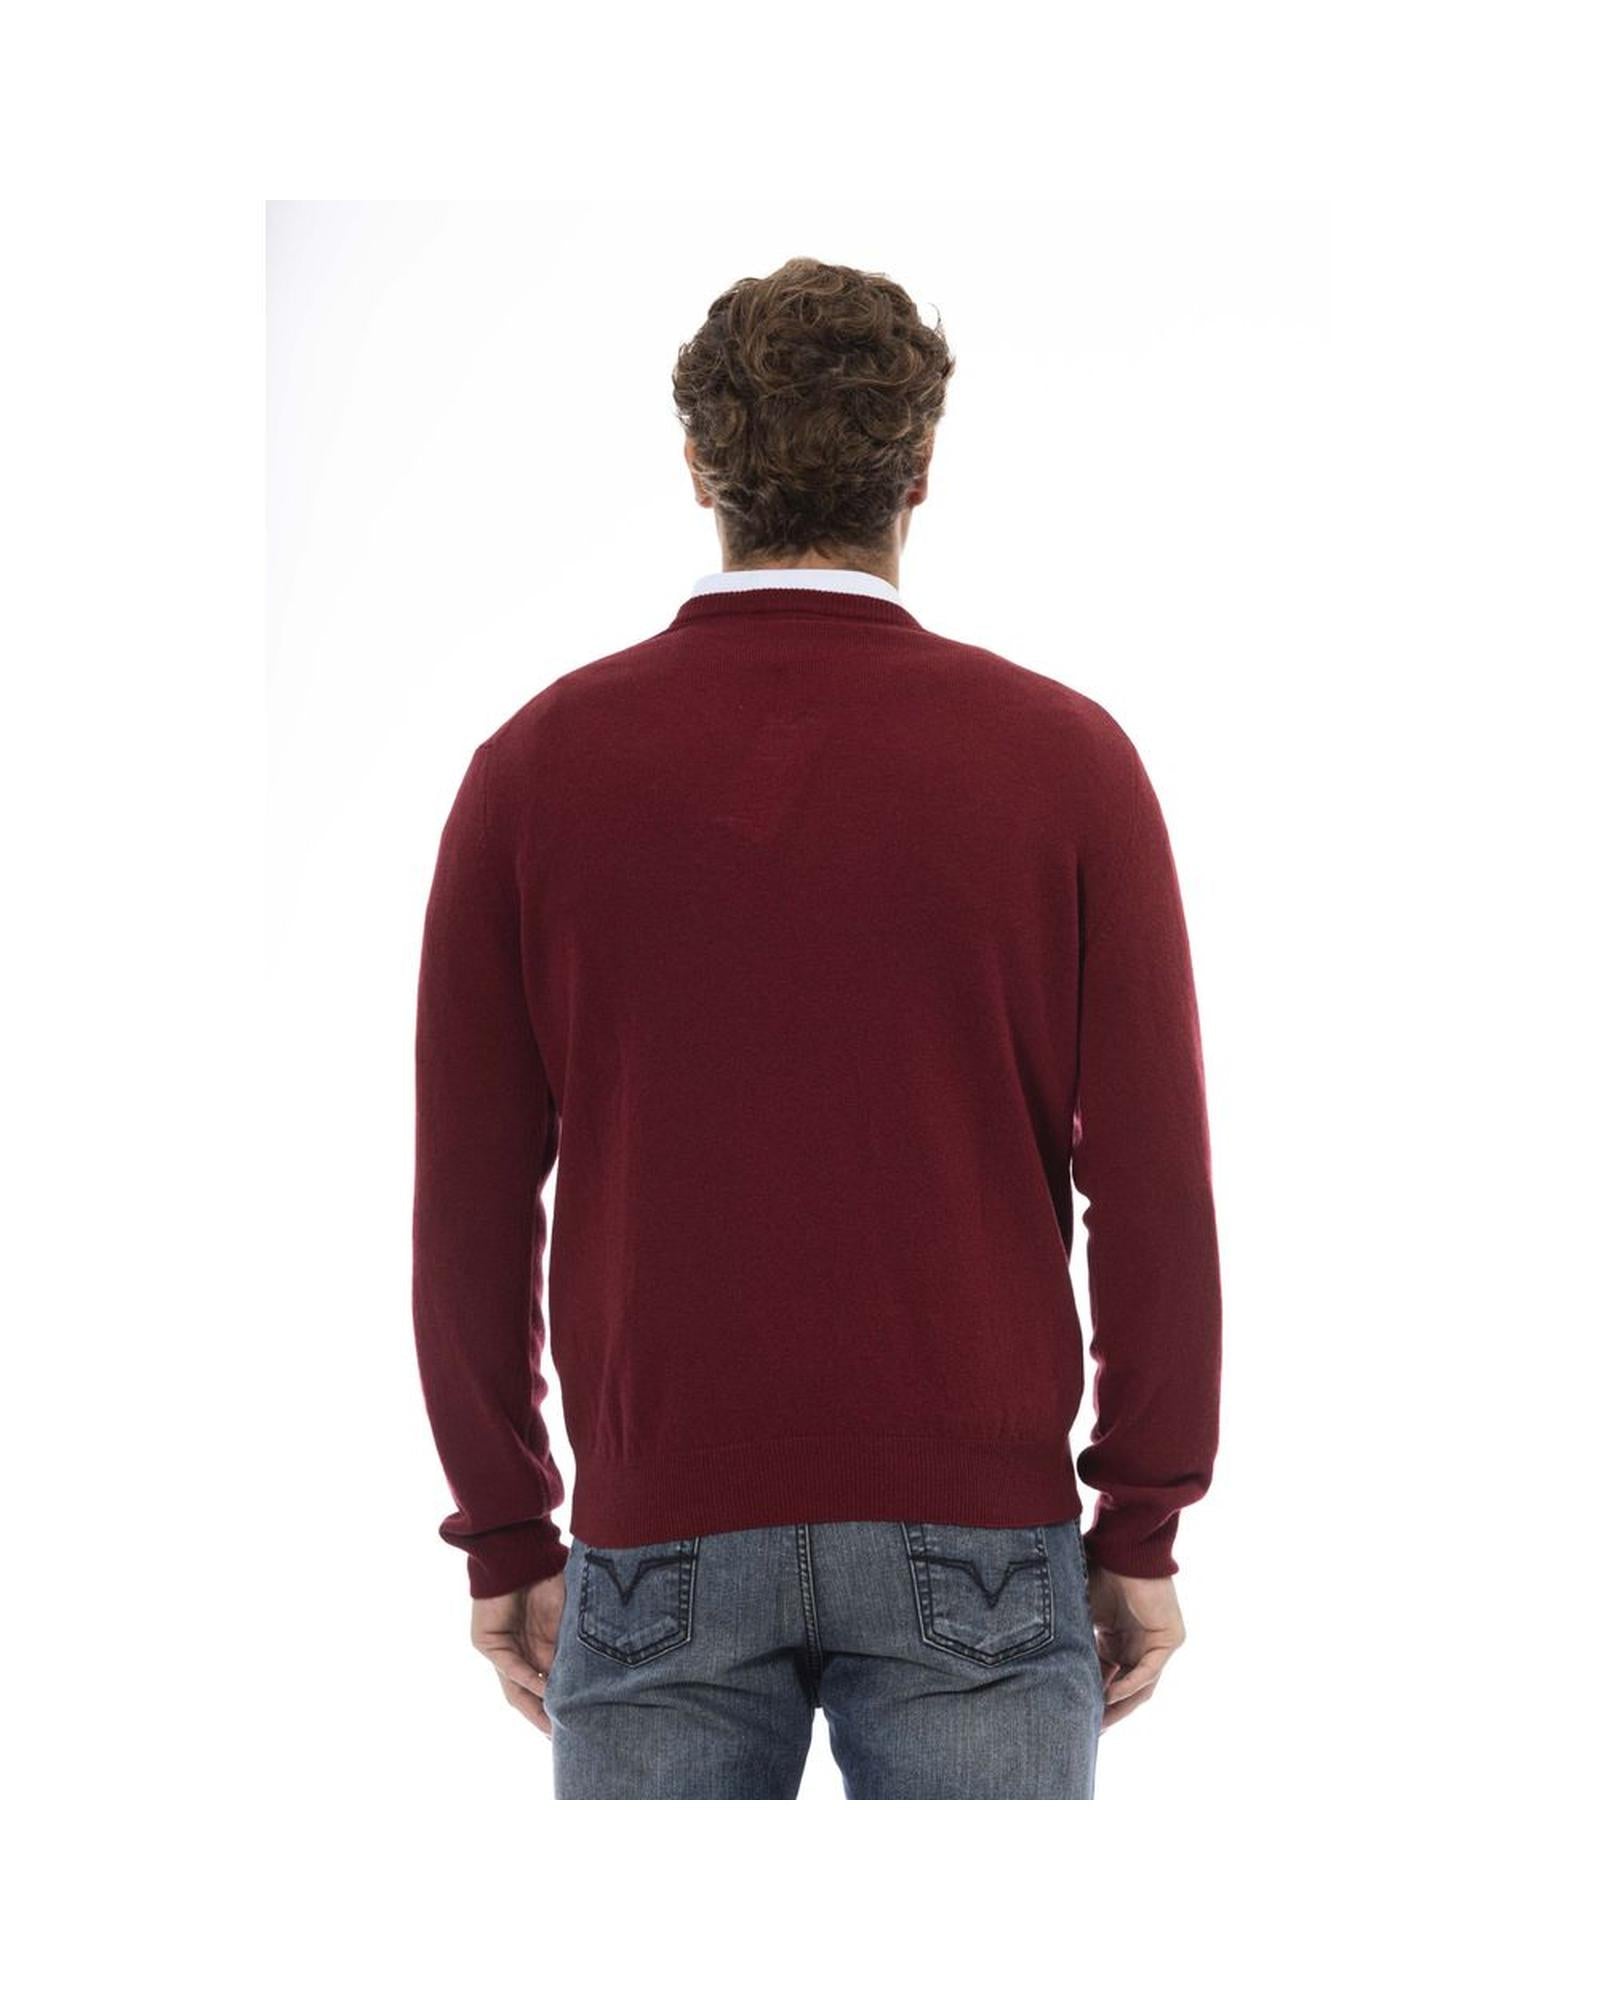 Men's Burgundy Wool Sweater - XL